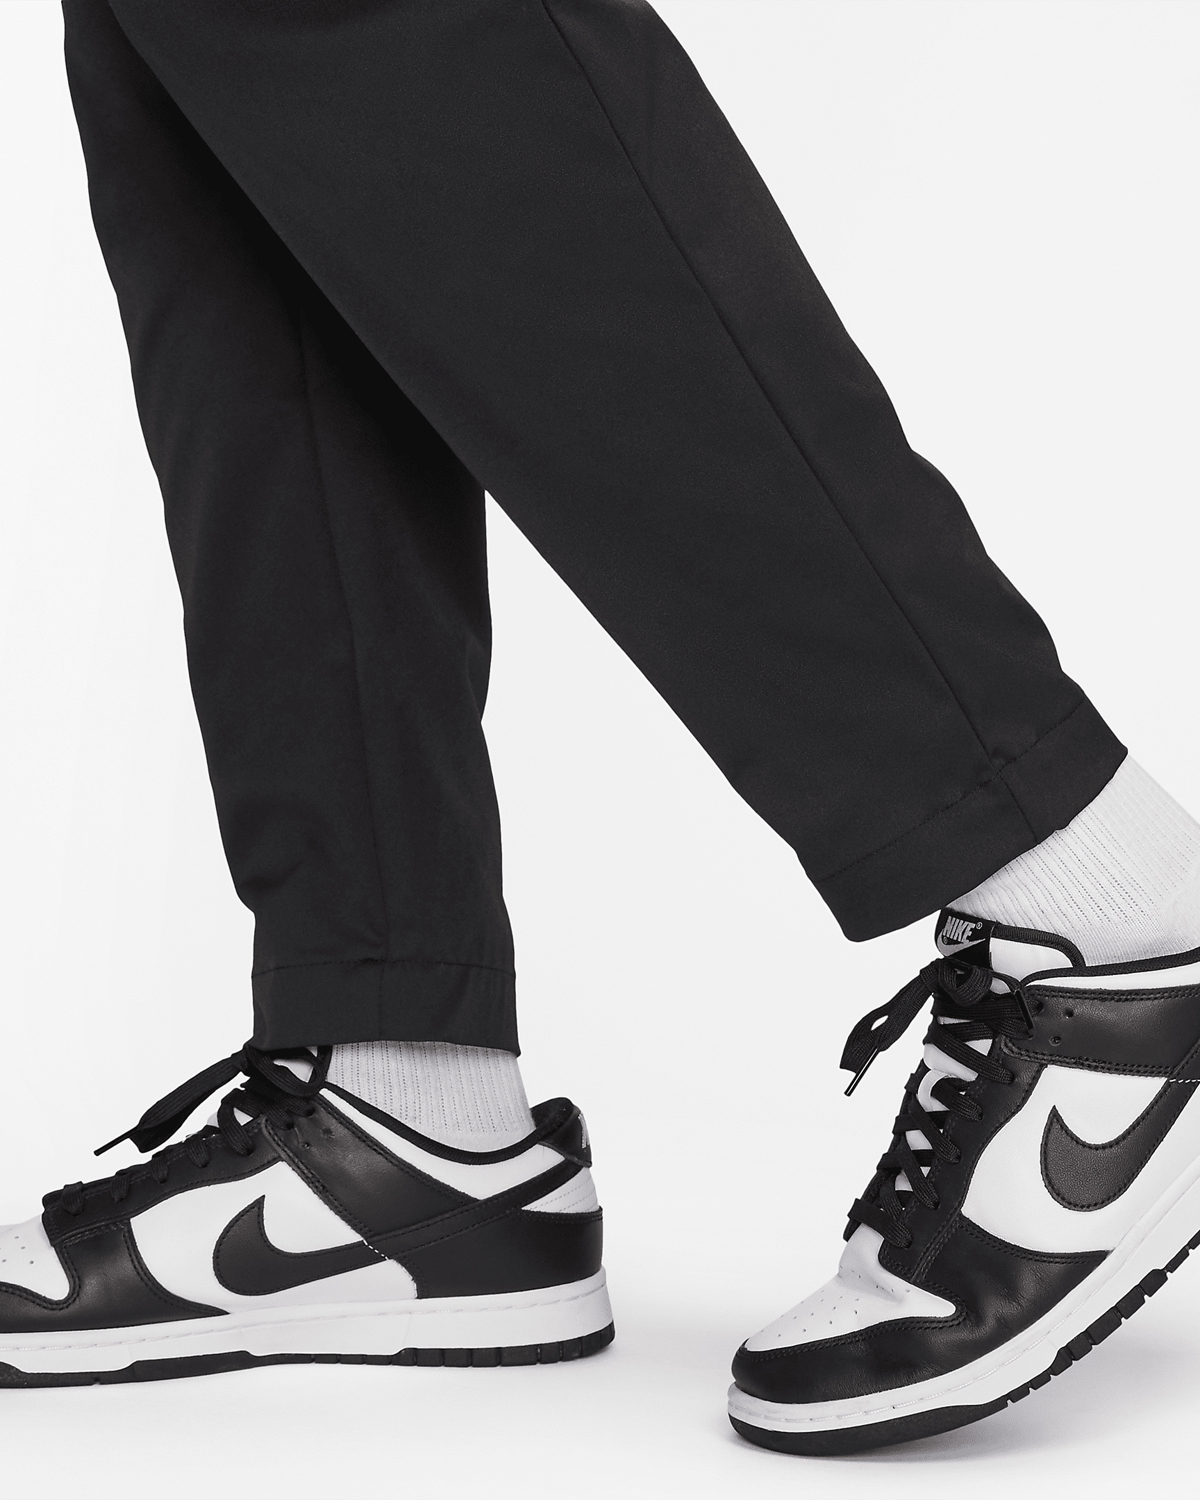 Nike-Club-Woven-Tapered-Leg-Pants-Black-White-4